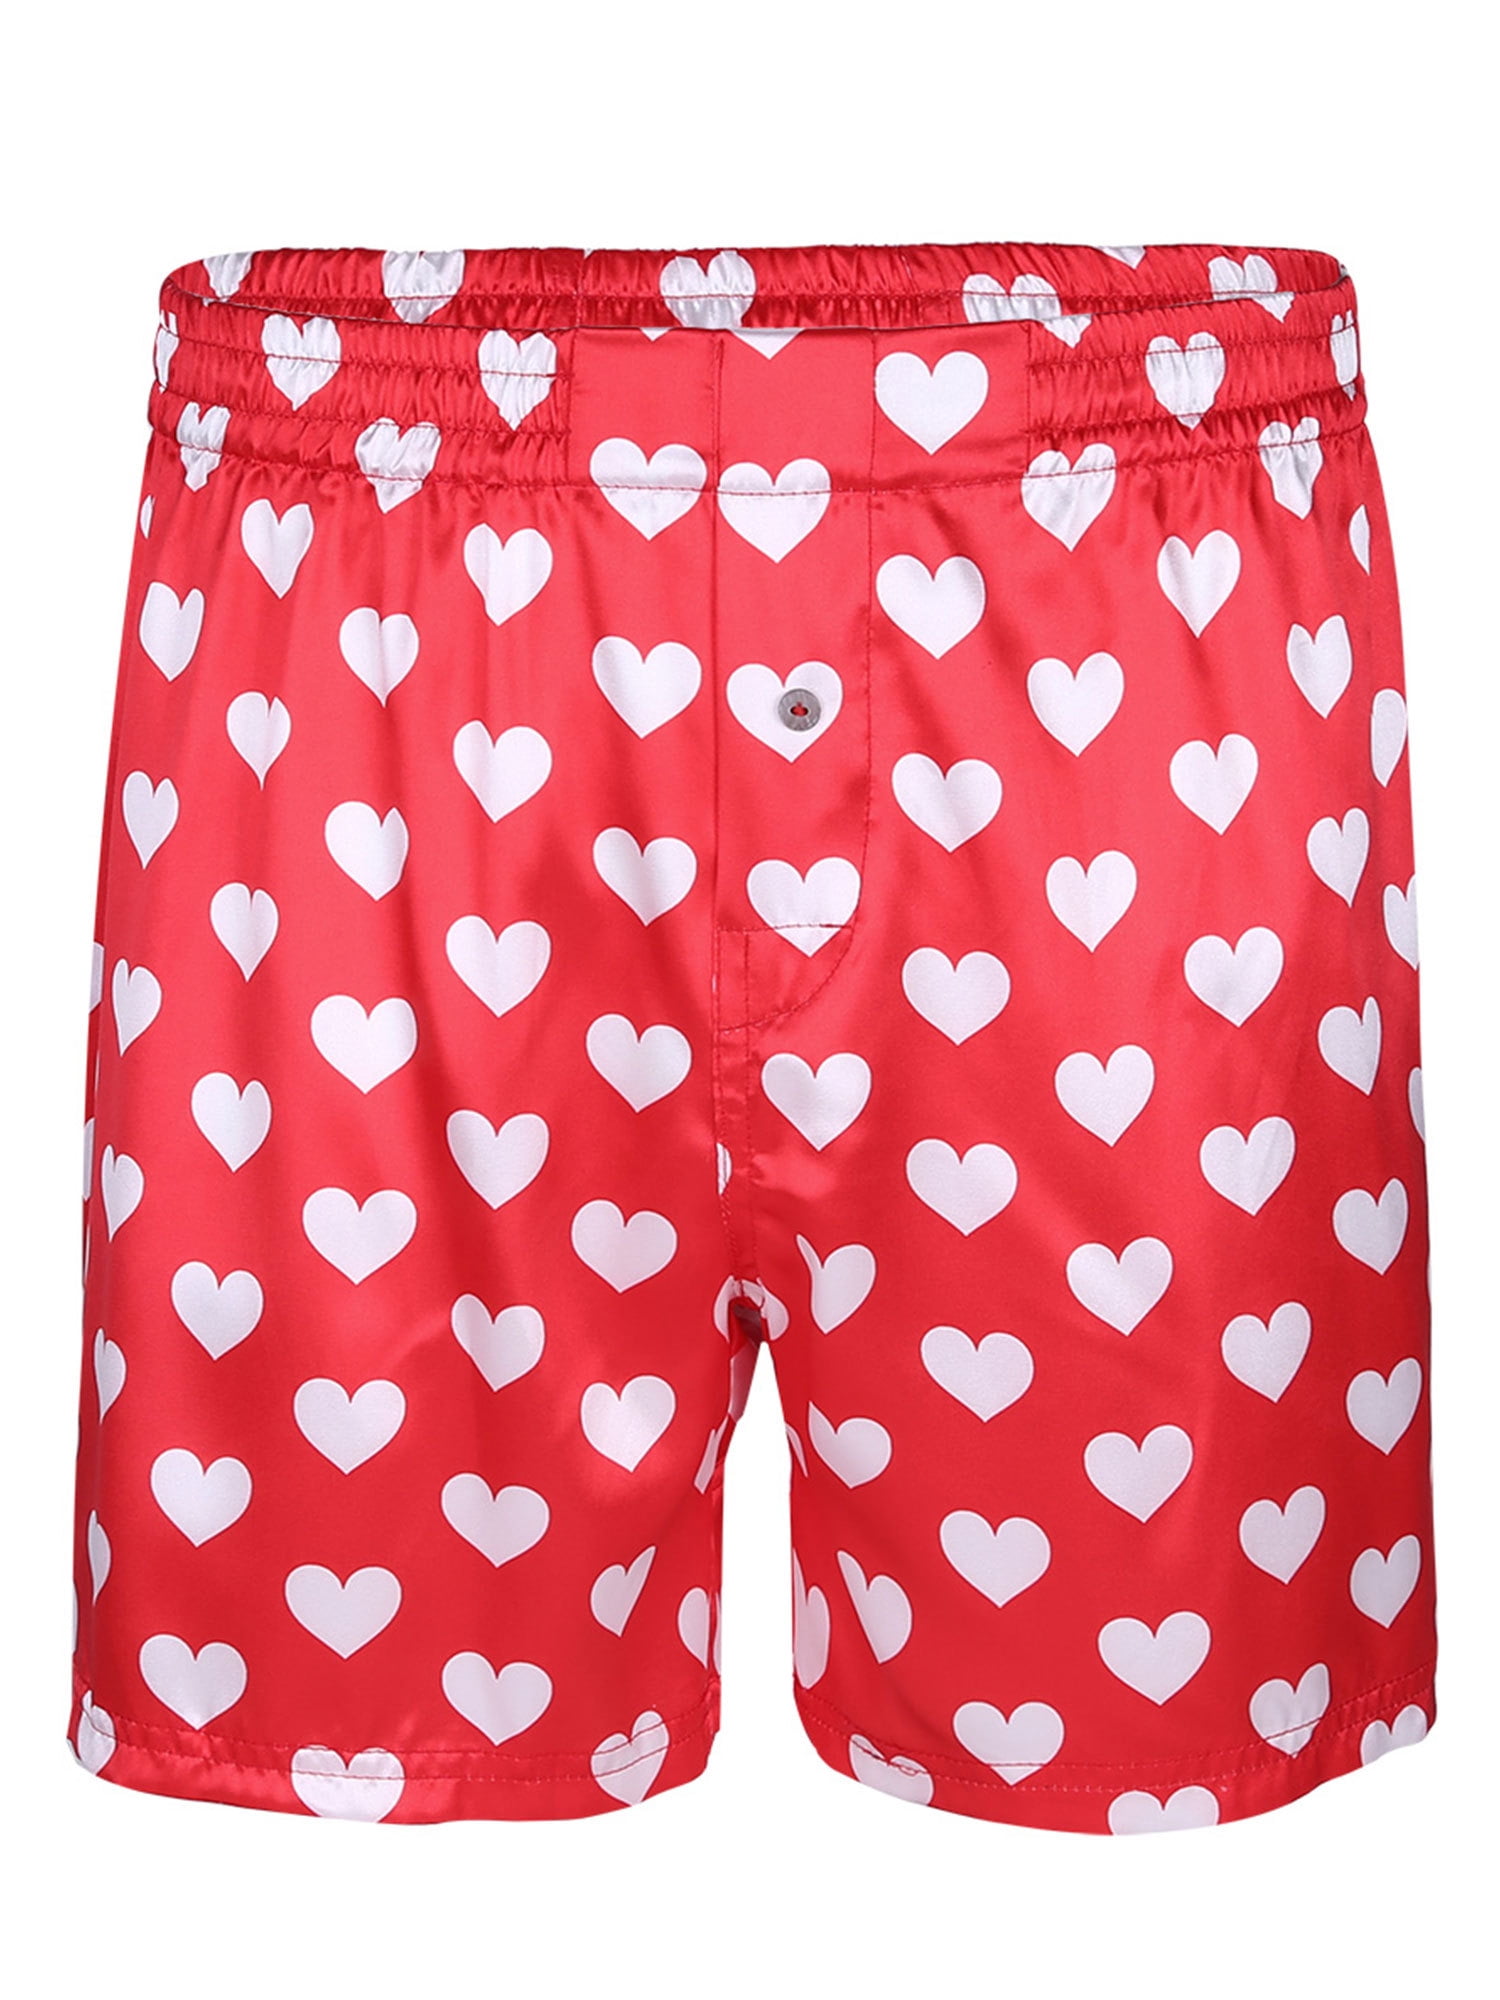 Aislor Men's Silky Satin Boxer Shorts Pajama Bottom Loose Fit Underwear ...